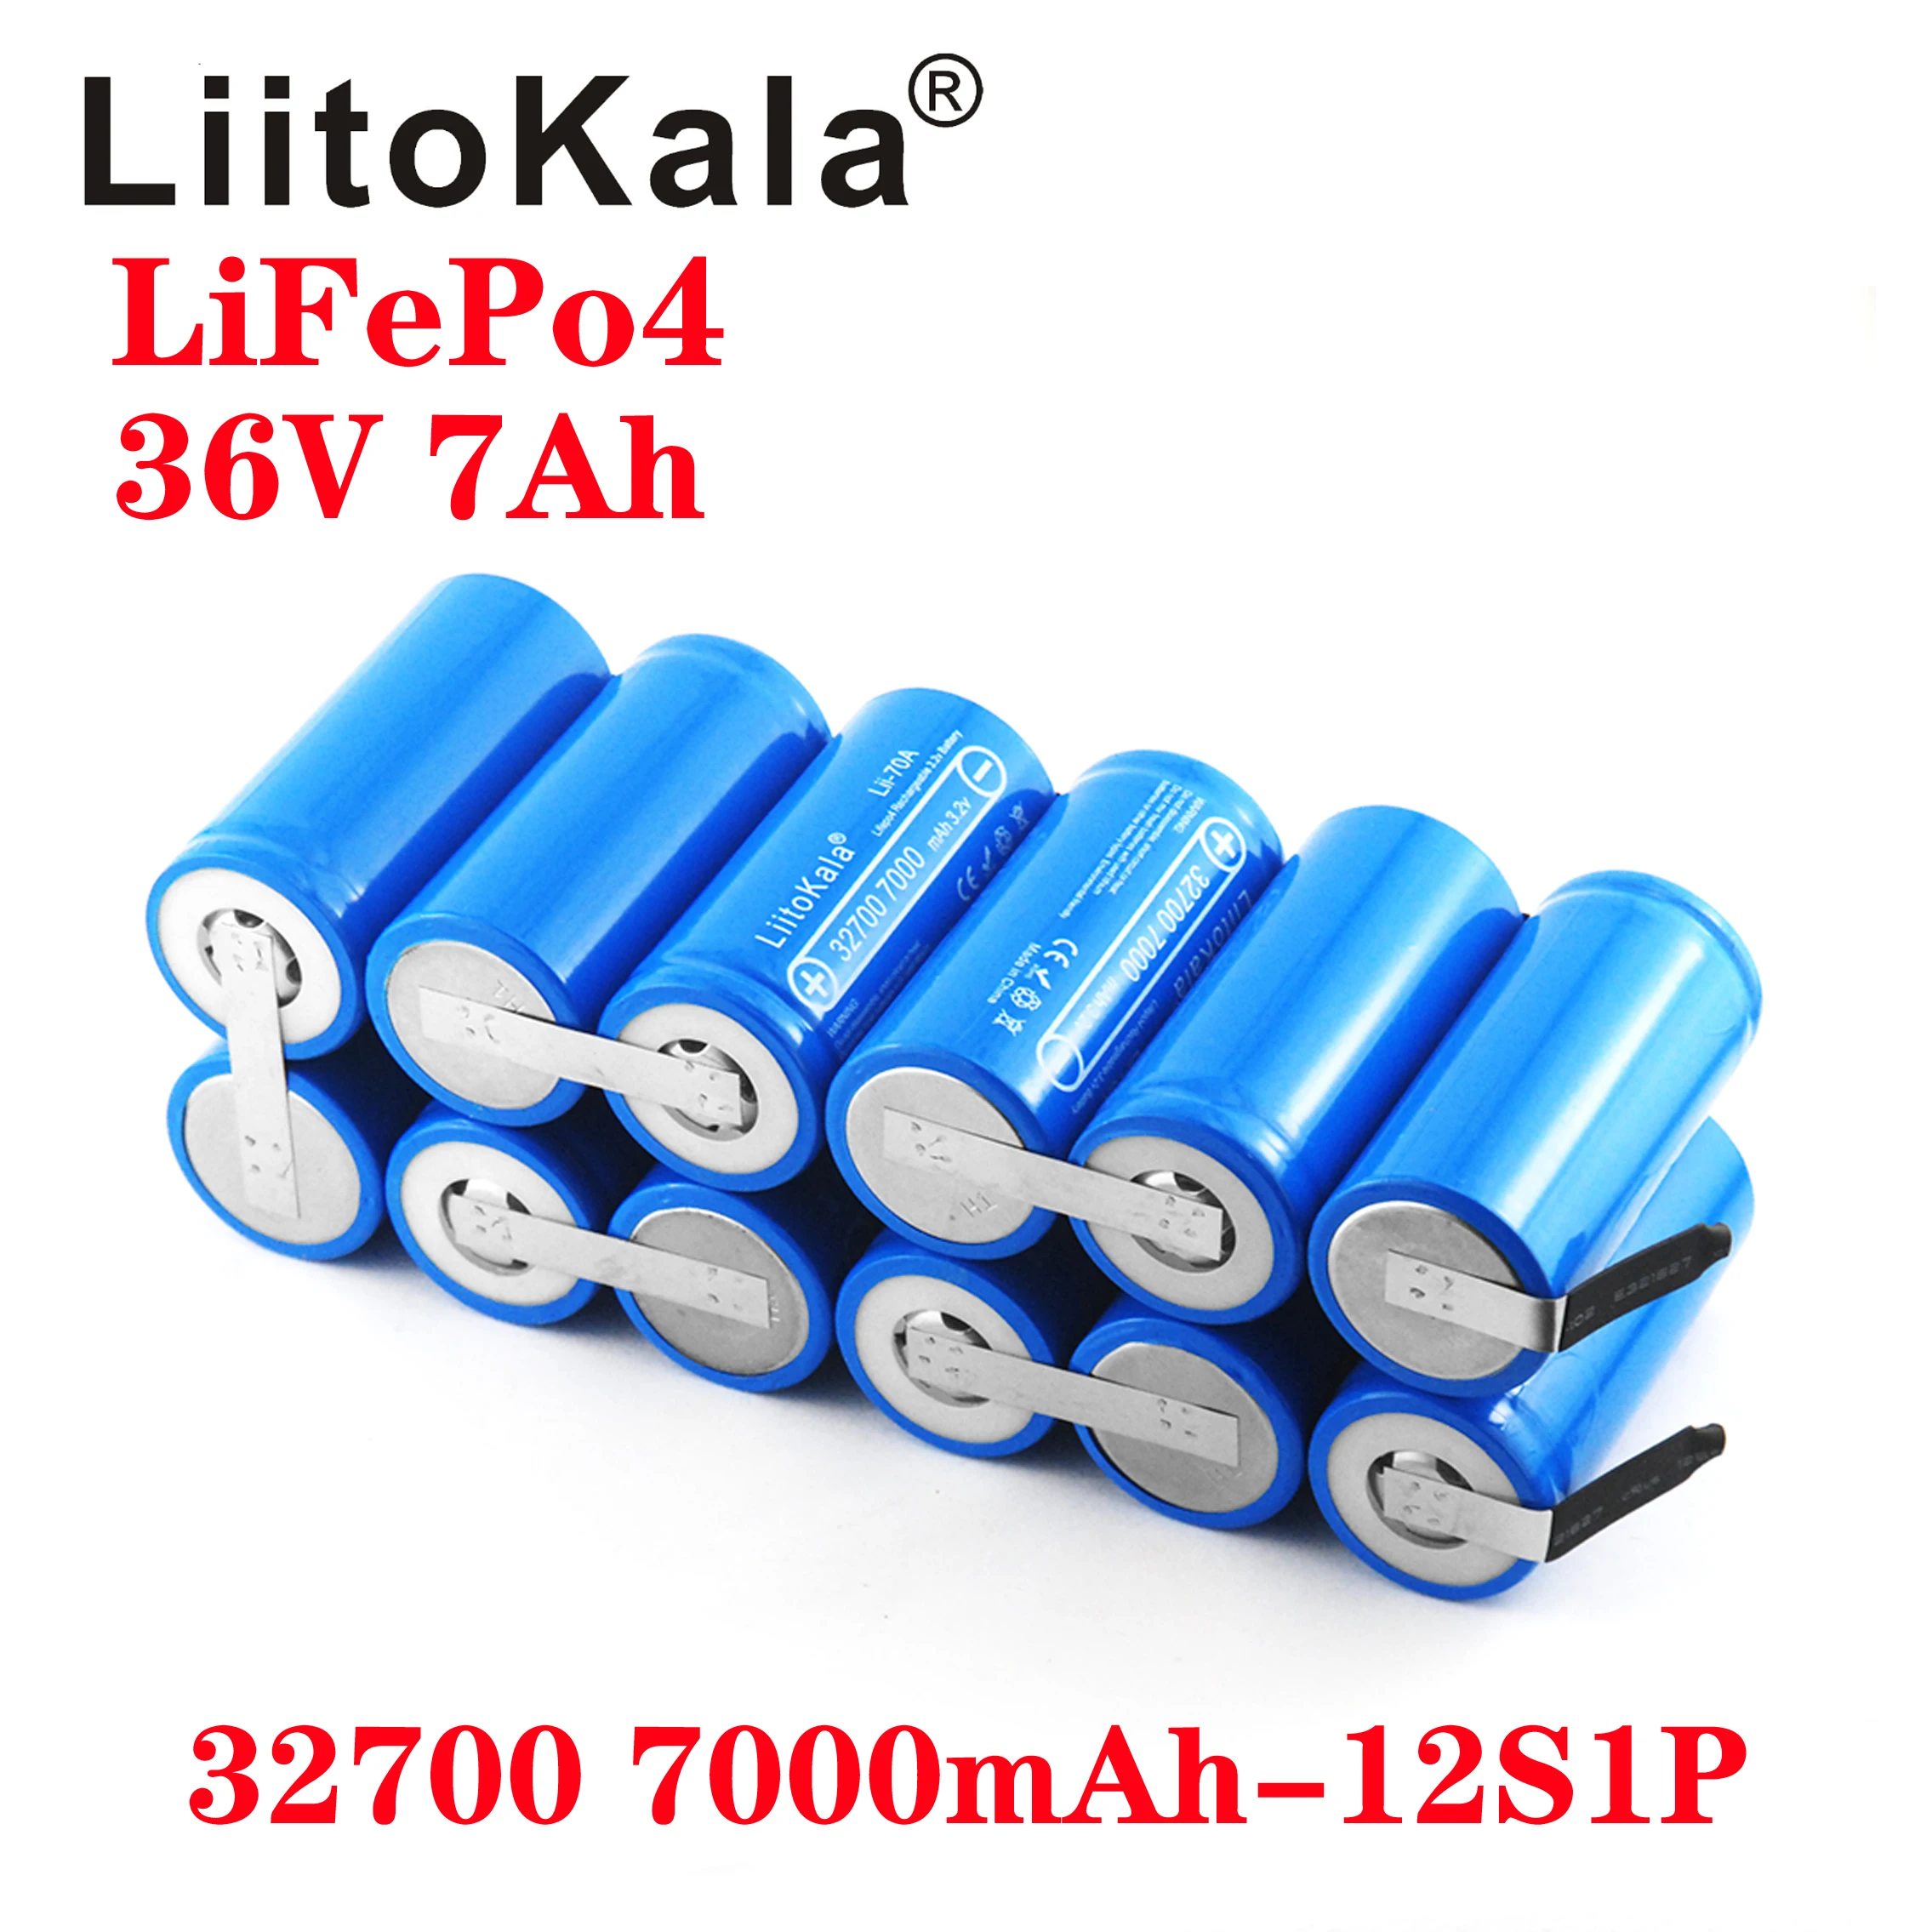 

LiitoKala 36V 7Ah 14ah 21ah 32700 7000mAh lii-70A LiFePO4 Battery 35A Continuous Discharge Maximum 55A High power battery DIY